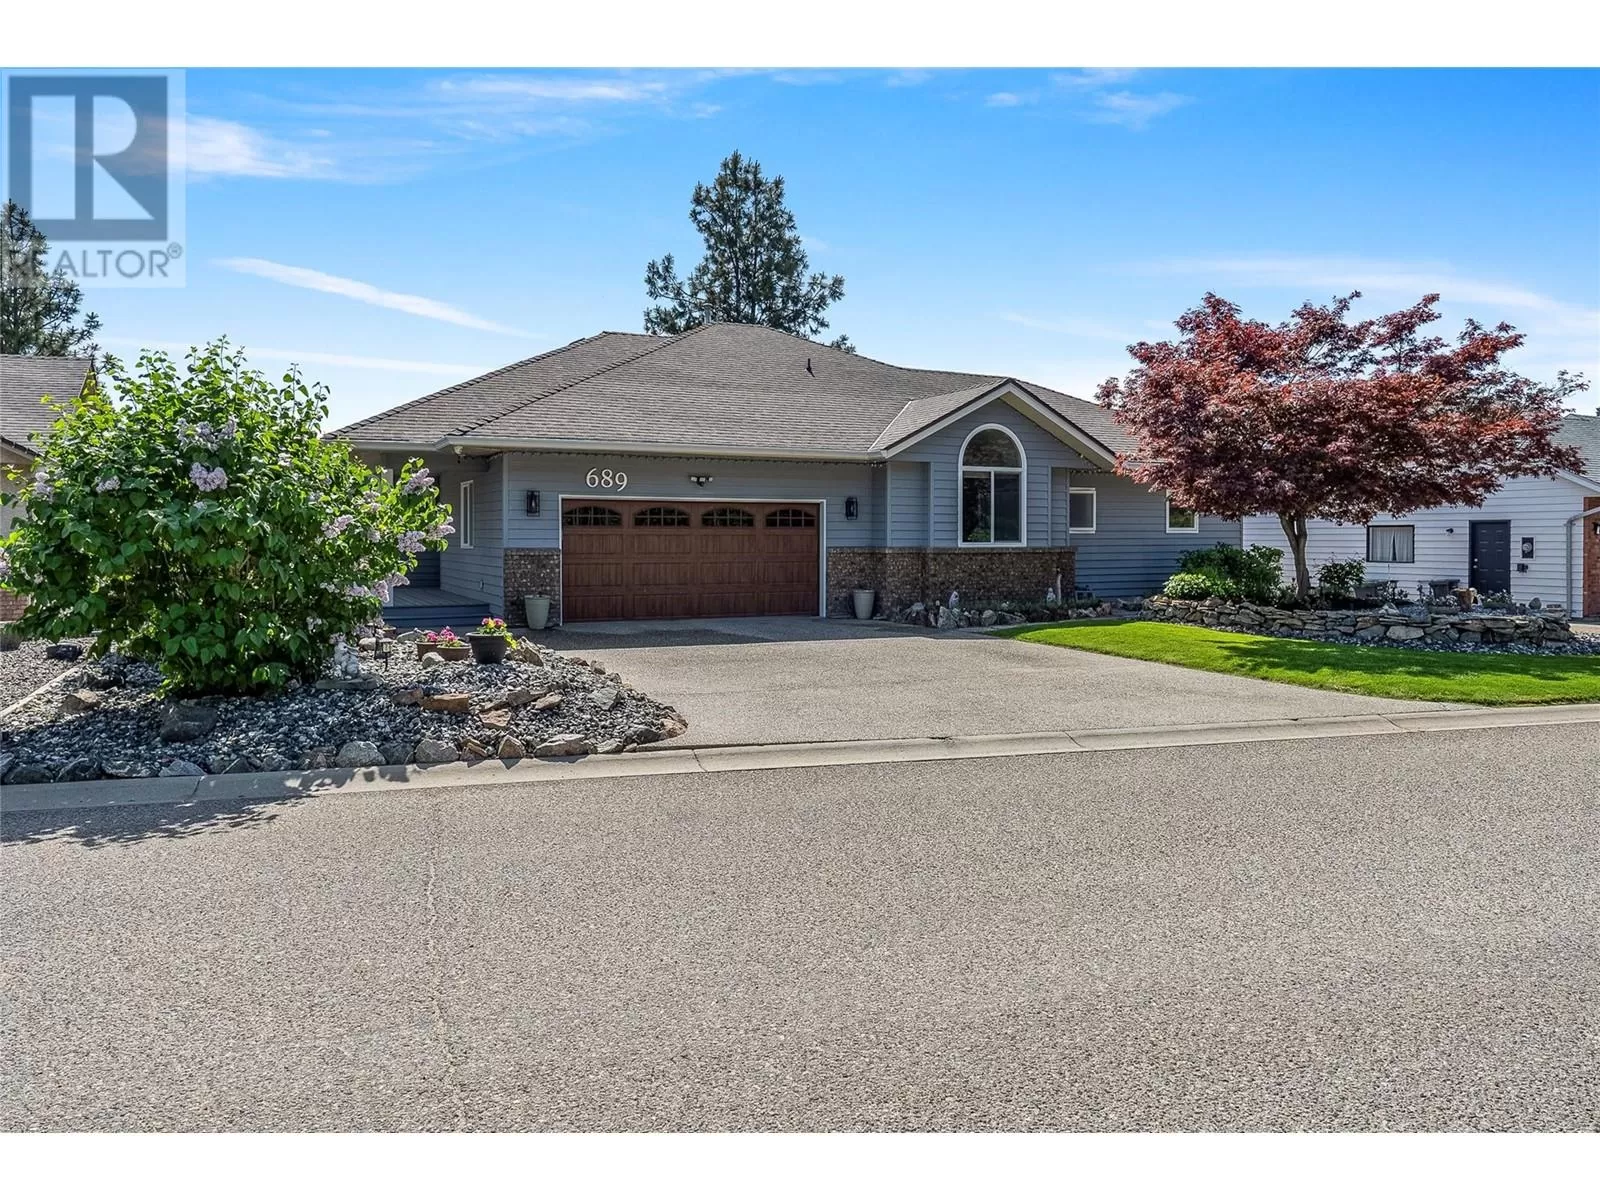 House for rent: 689 Cassiar Crescent, Kelowna, British Columbia V1V 1M7